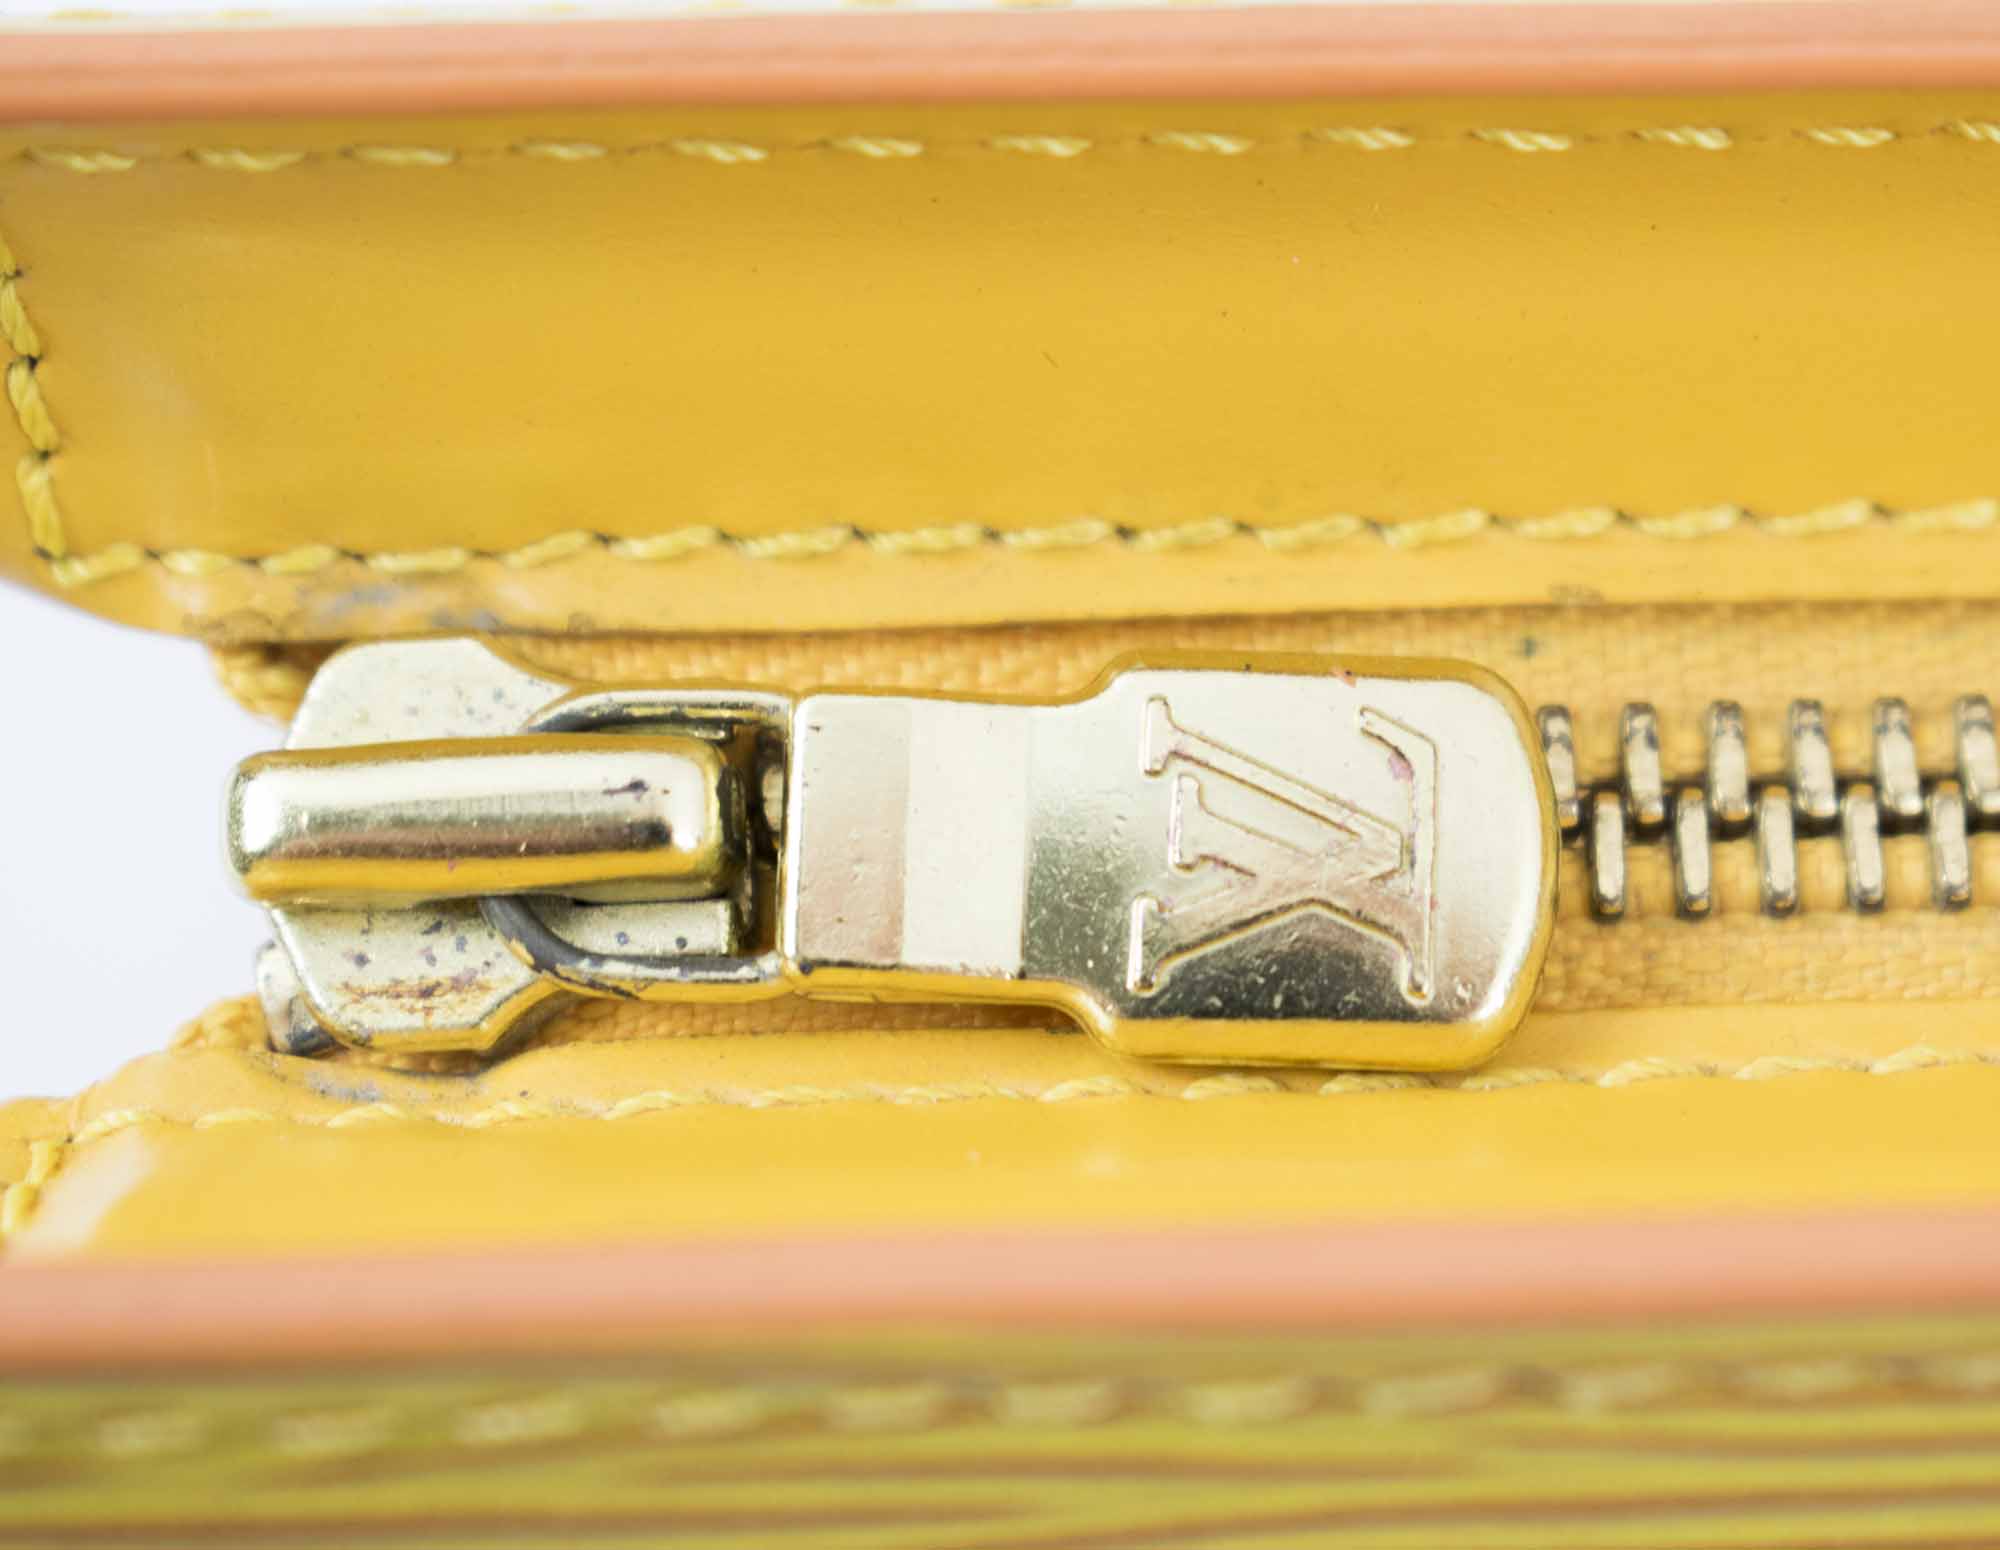 Louis Vuitton Wallet Epi Vintage Discontinued LOUIS VUITTON Folding M63549  Tassili Yellow